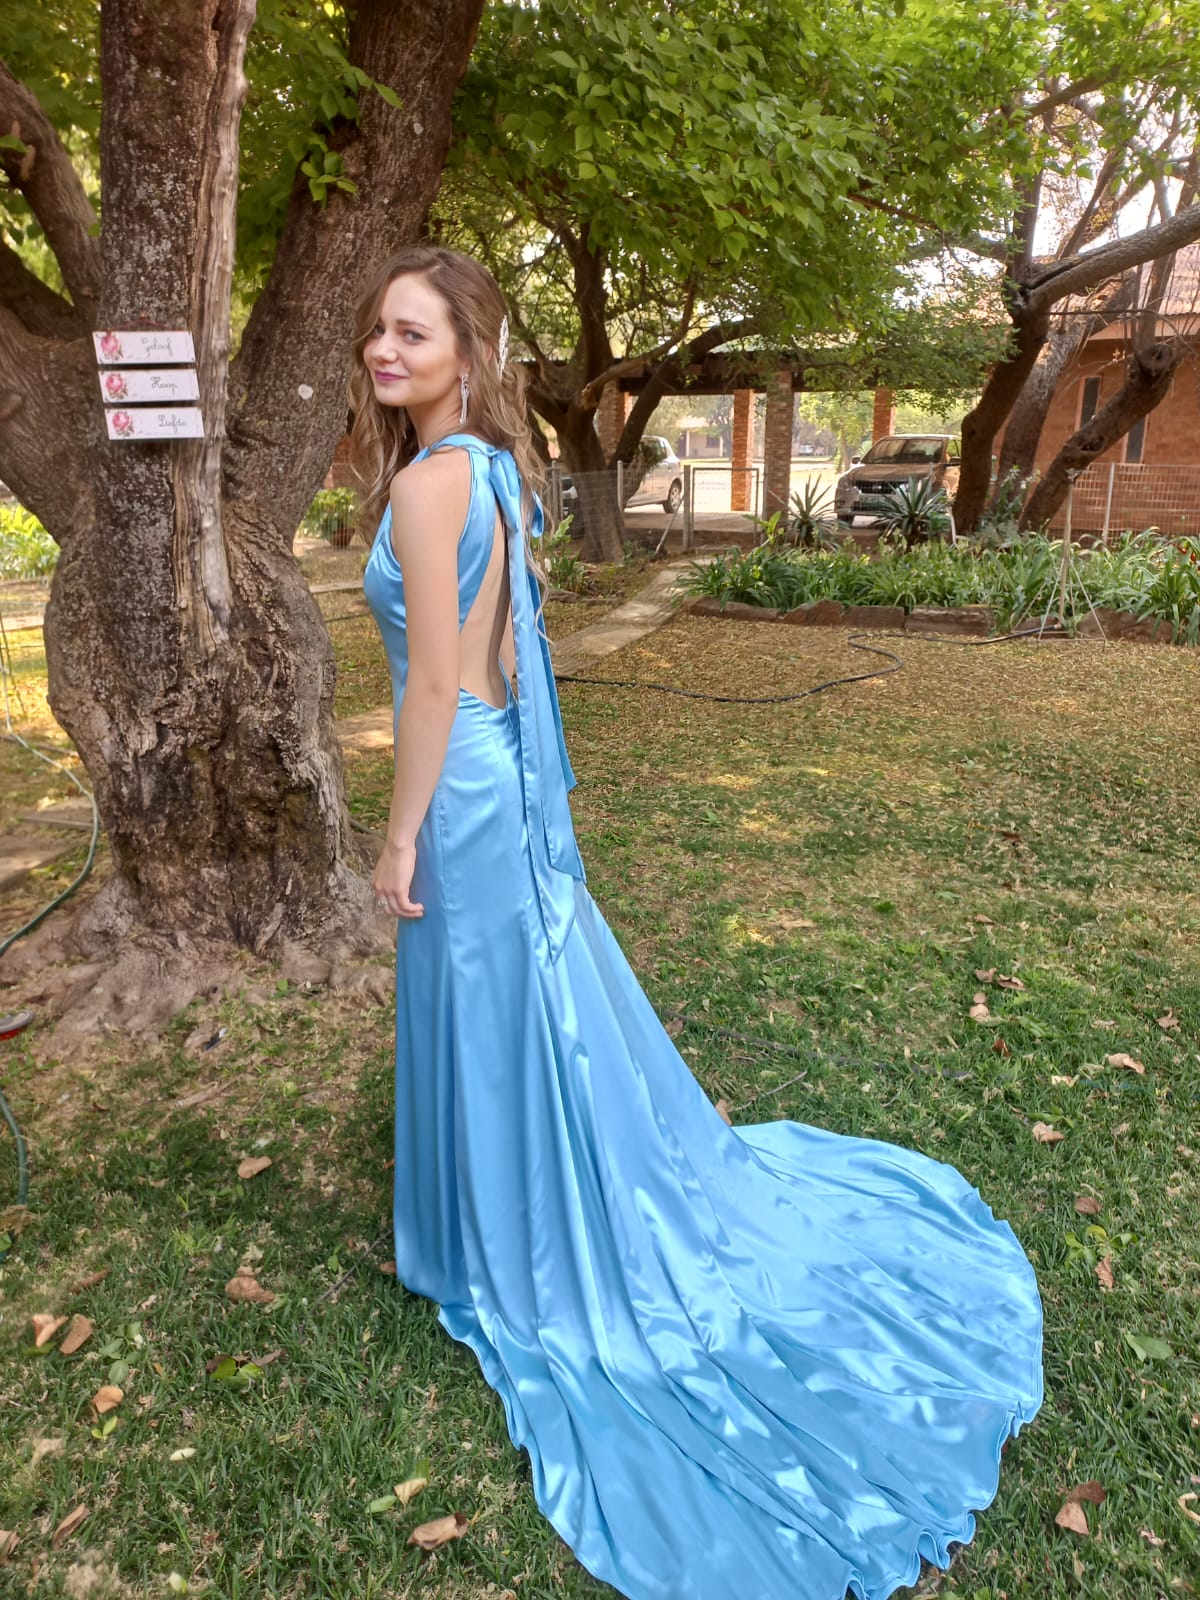 Soft blue dress